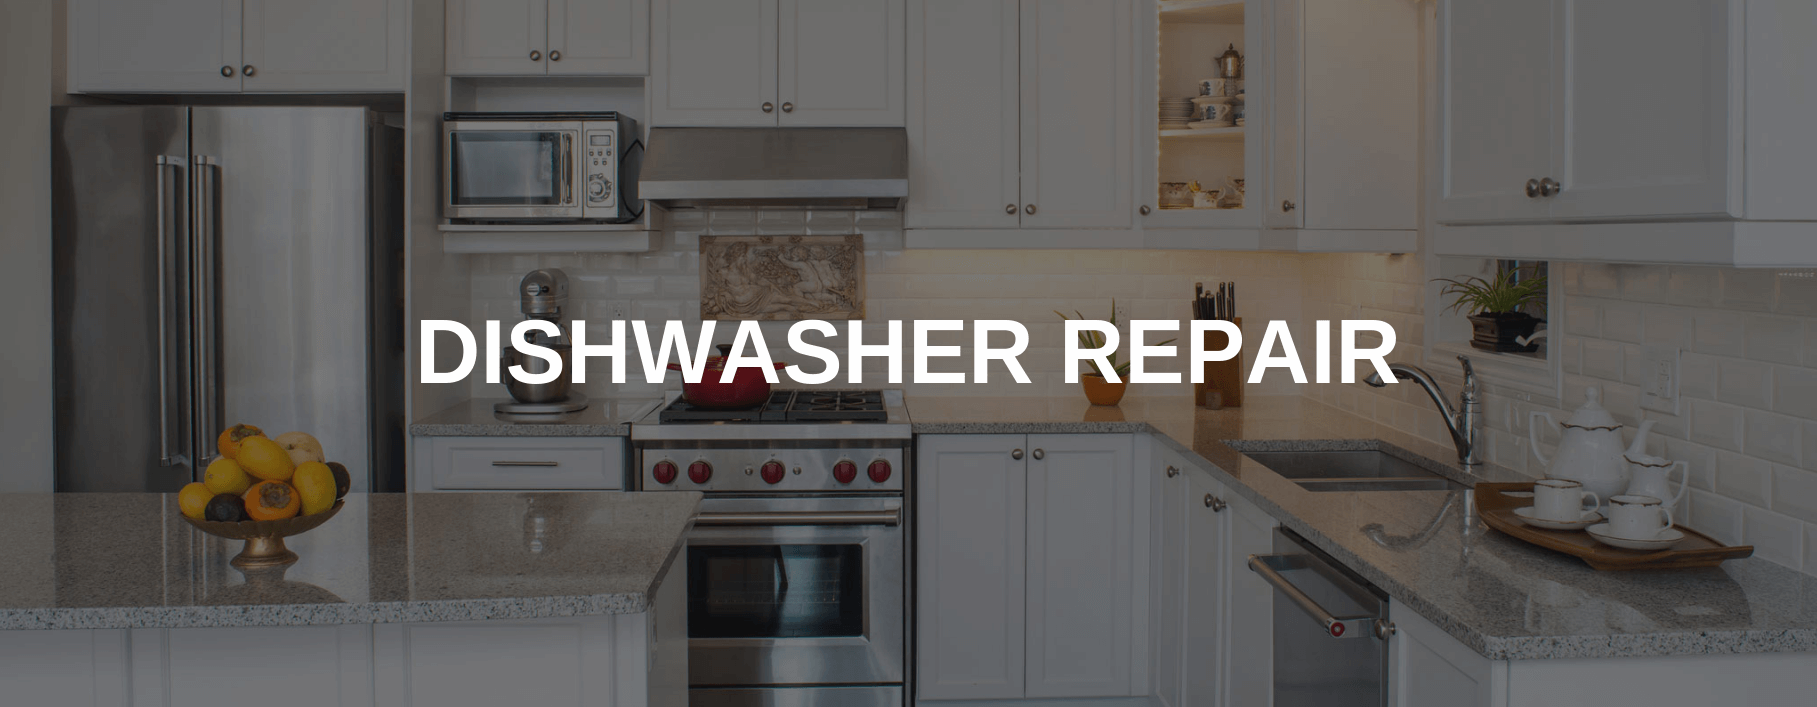 dishwasher-repair-toms-river-nj-732-217-7116-township-appliance-repair